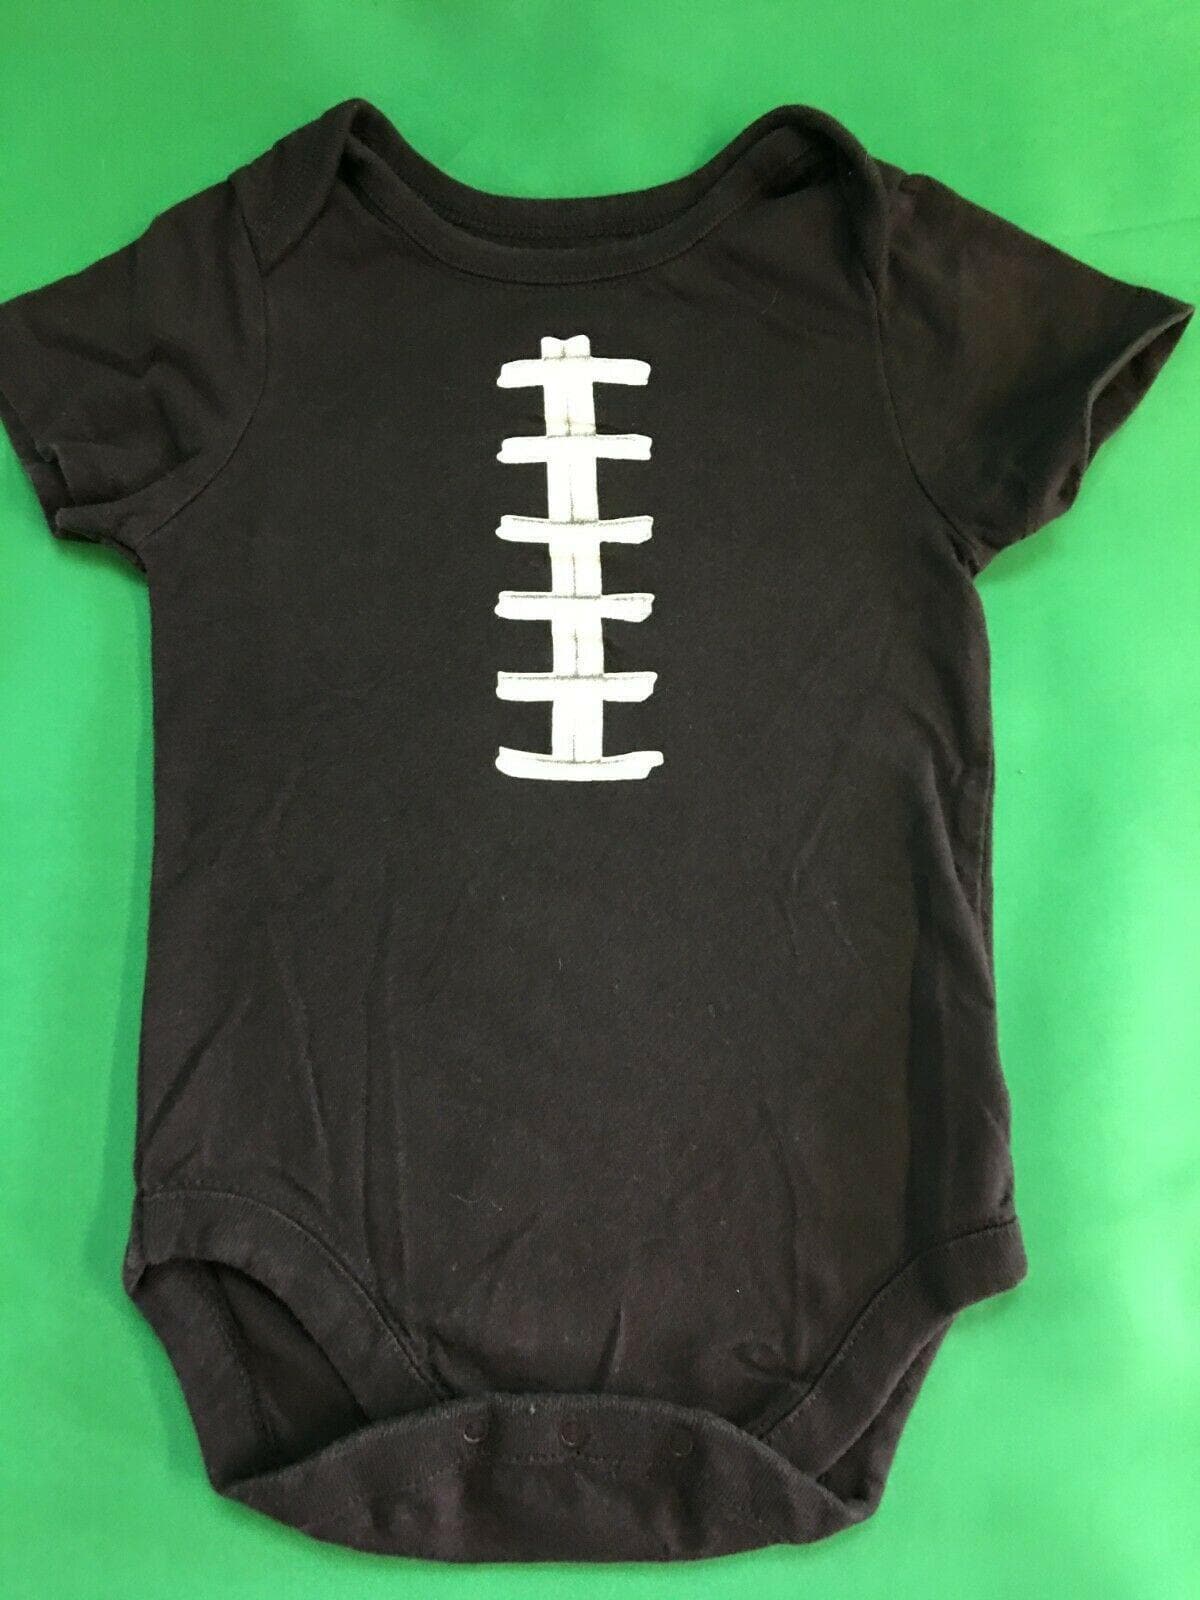 American Football Bodysuit/Vest Toddler 12-18 Months